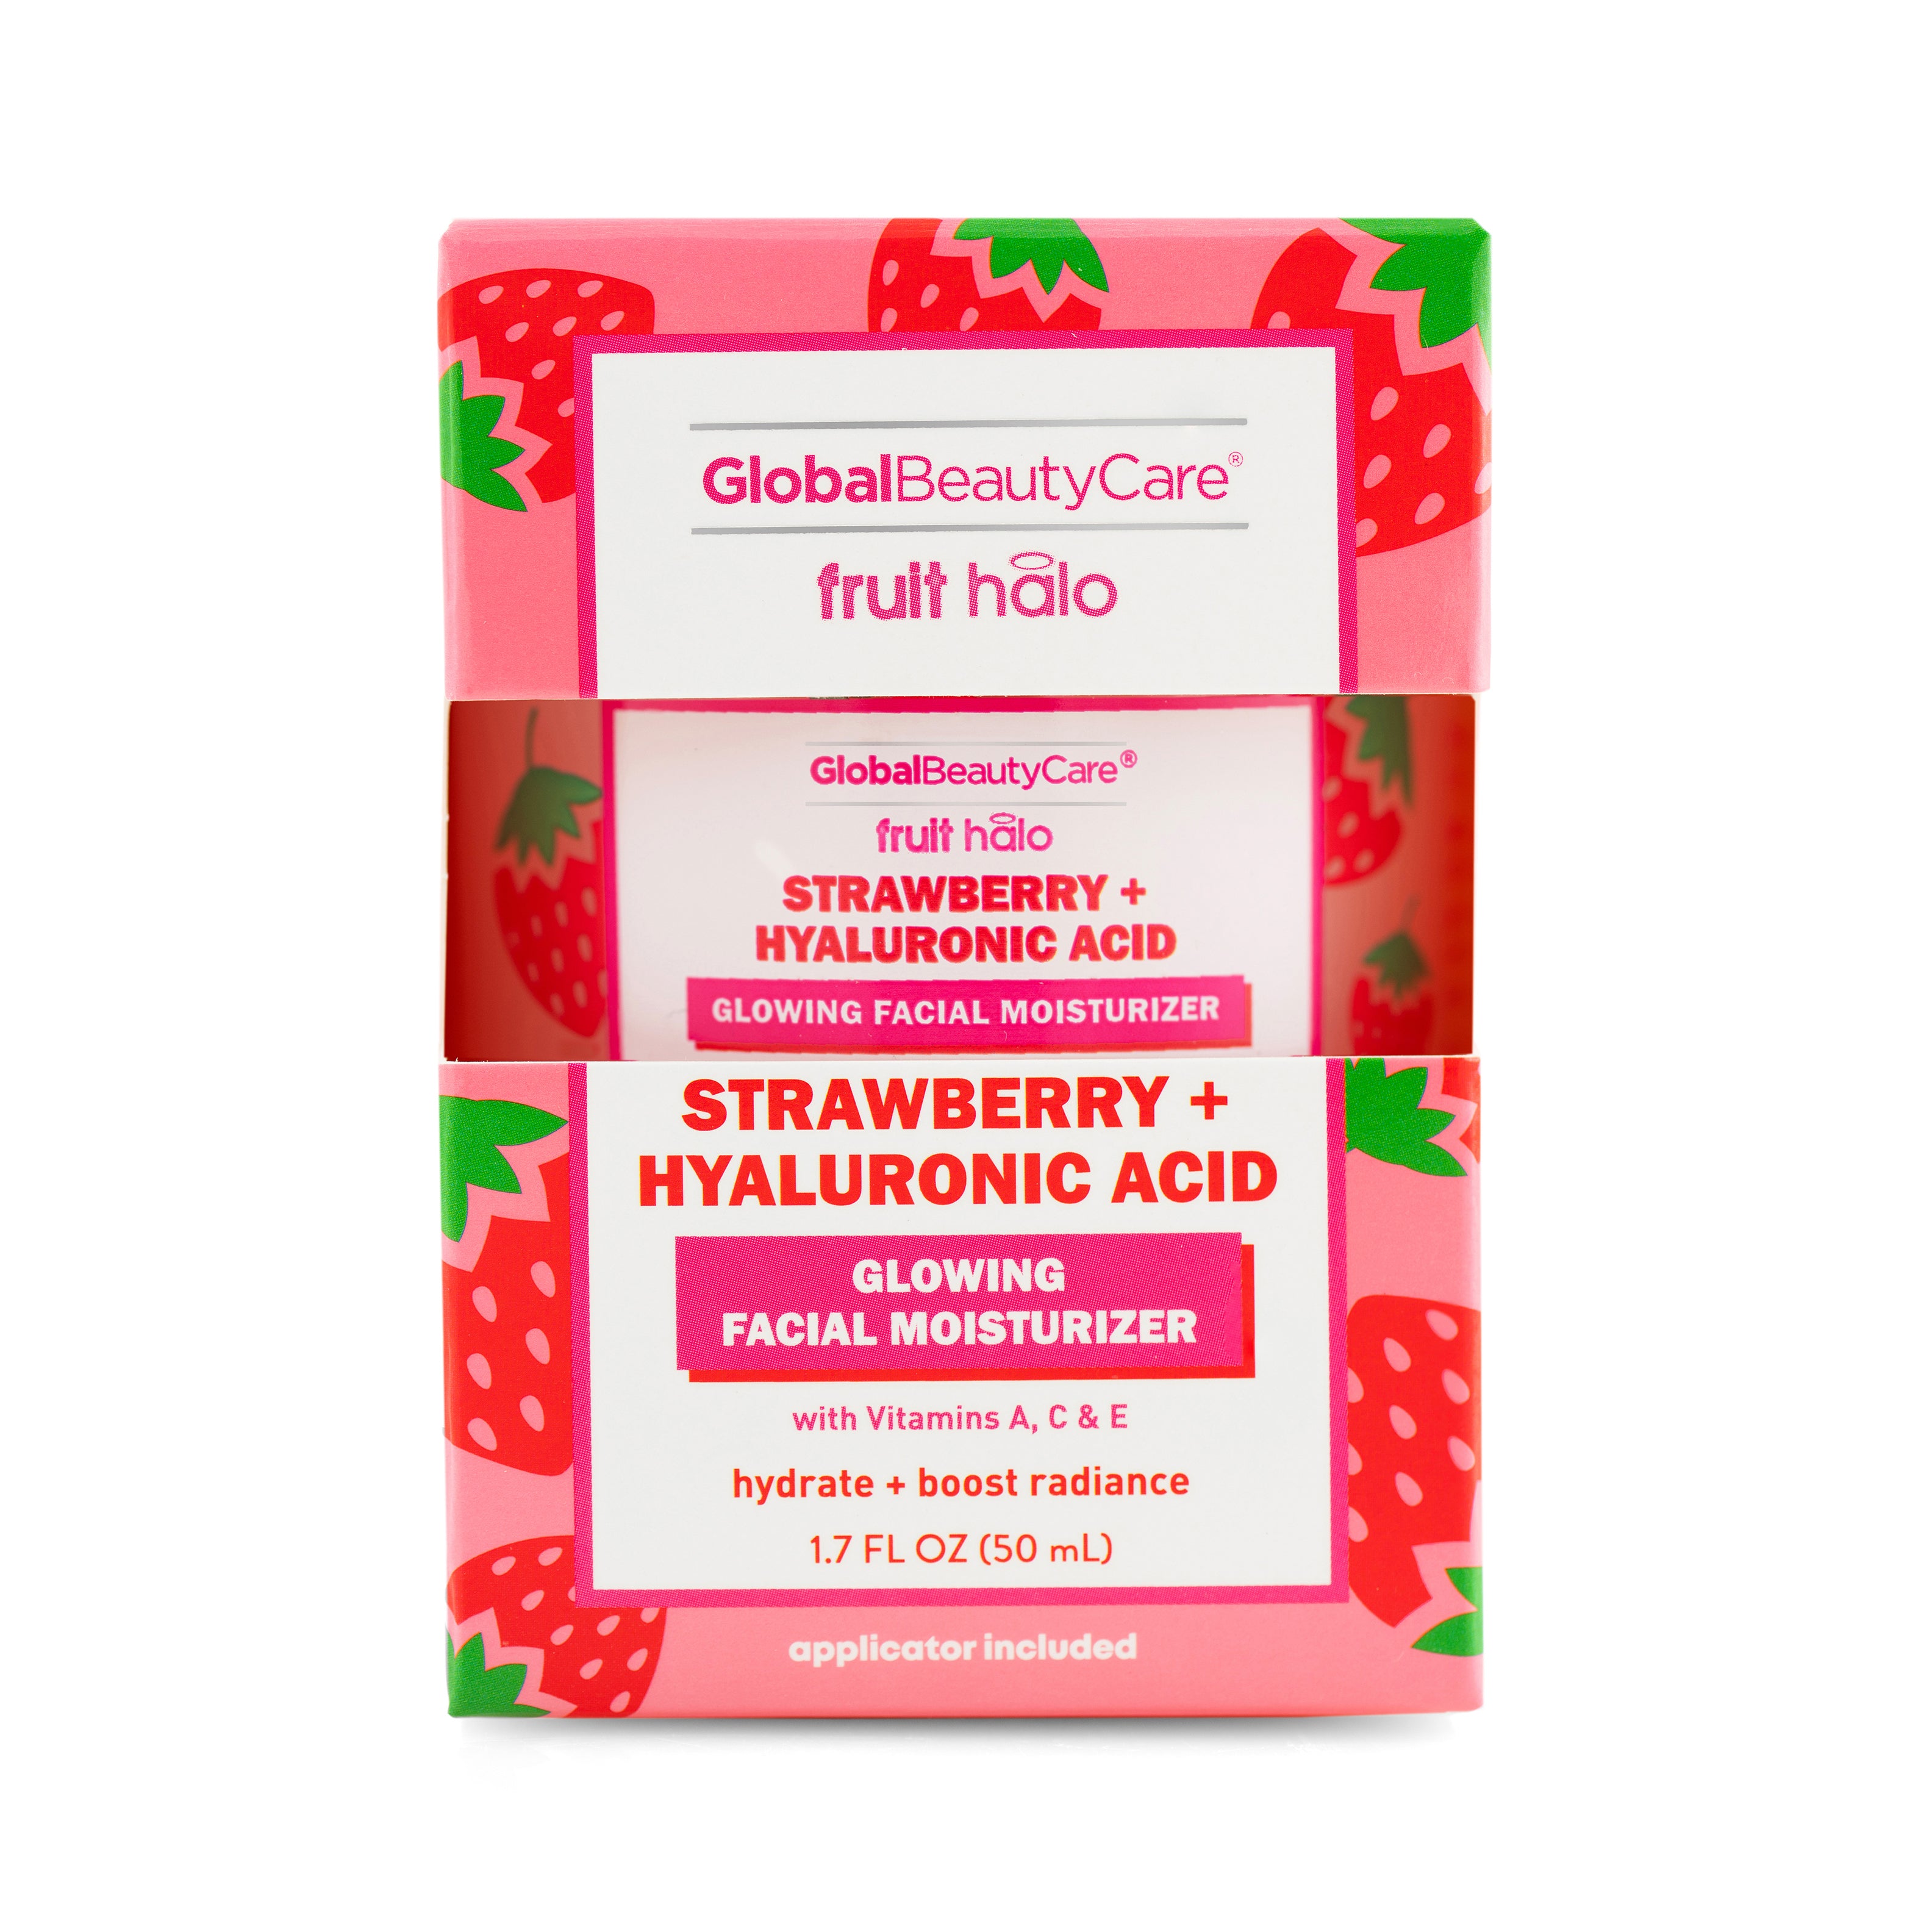 Strawberry + Hyaluronic Acid Glowing Facial Moisturizer